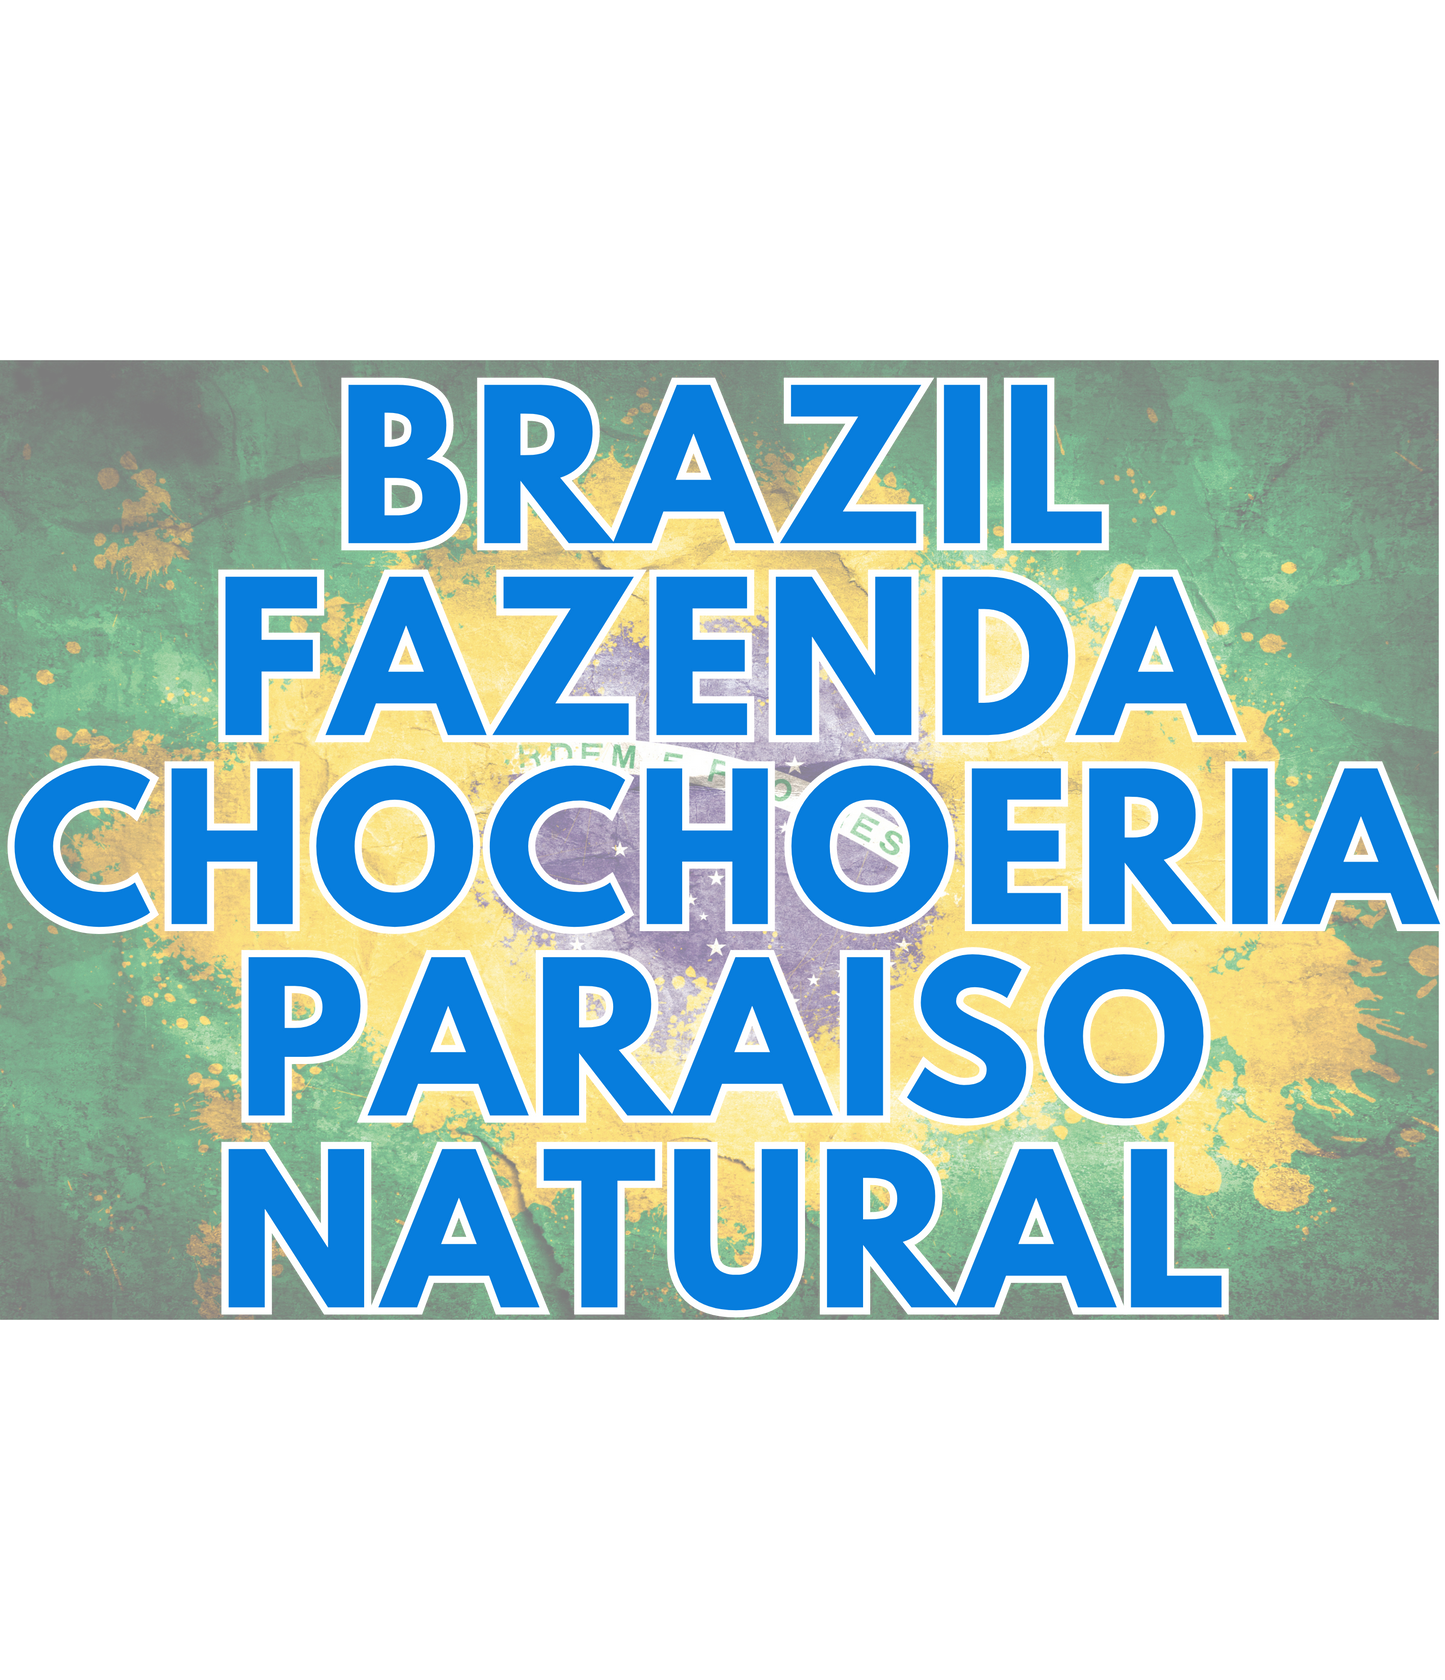 Brazil Fazenda Cochoeria Paraiso Natural